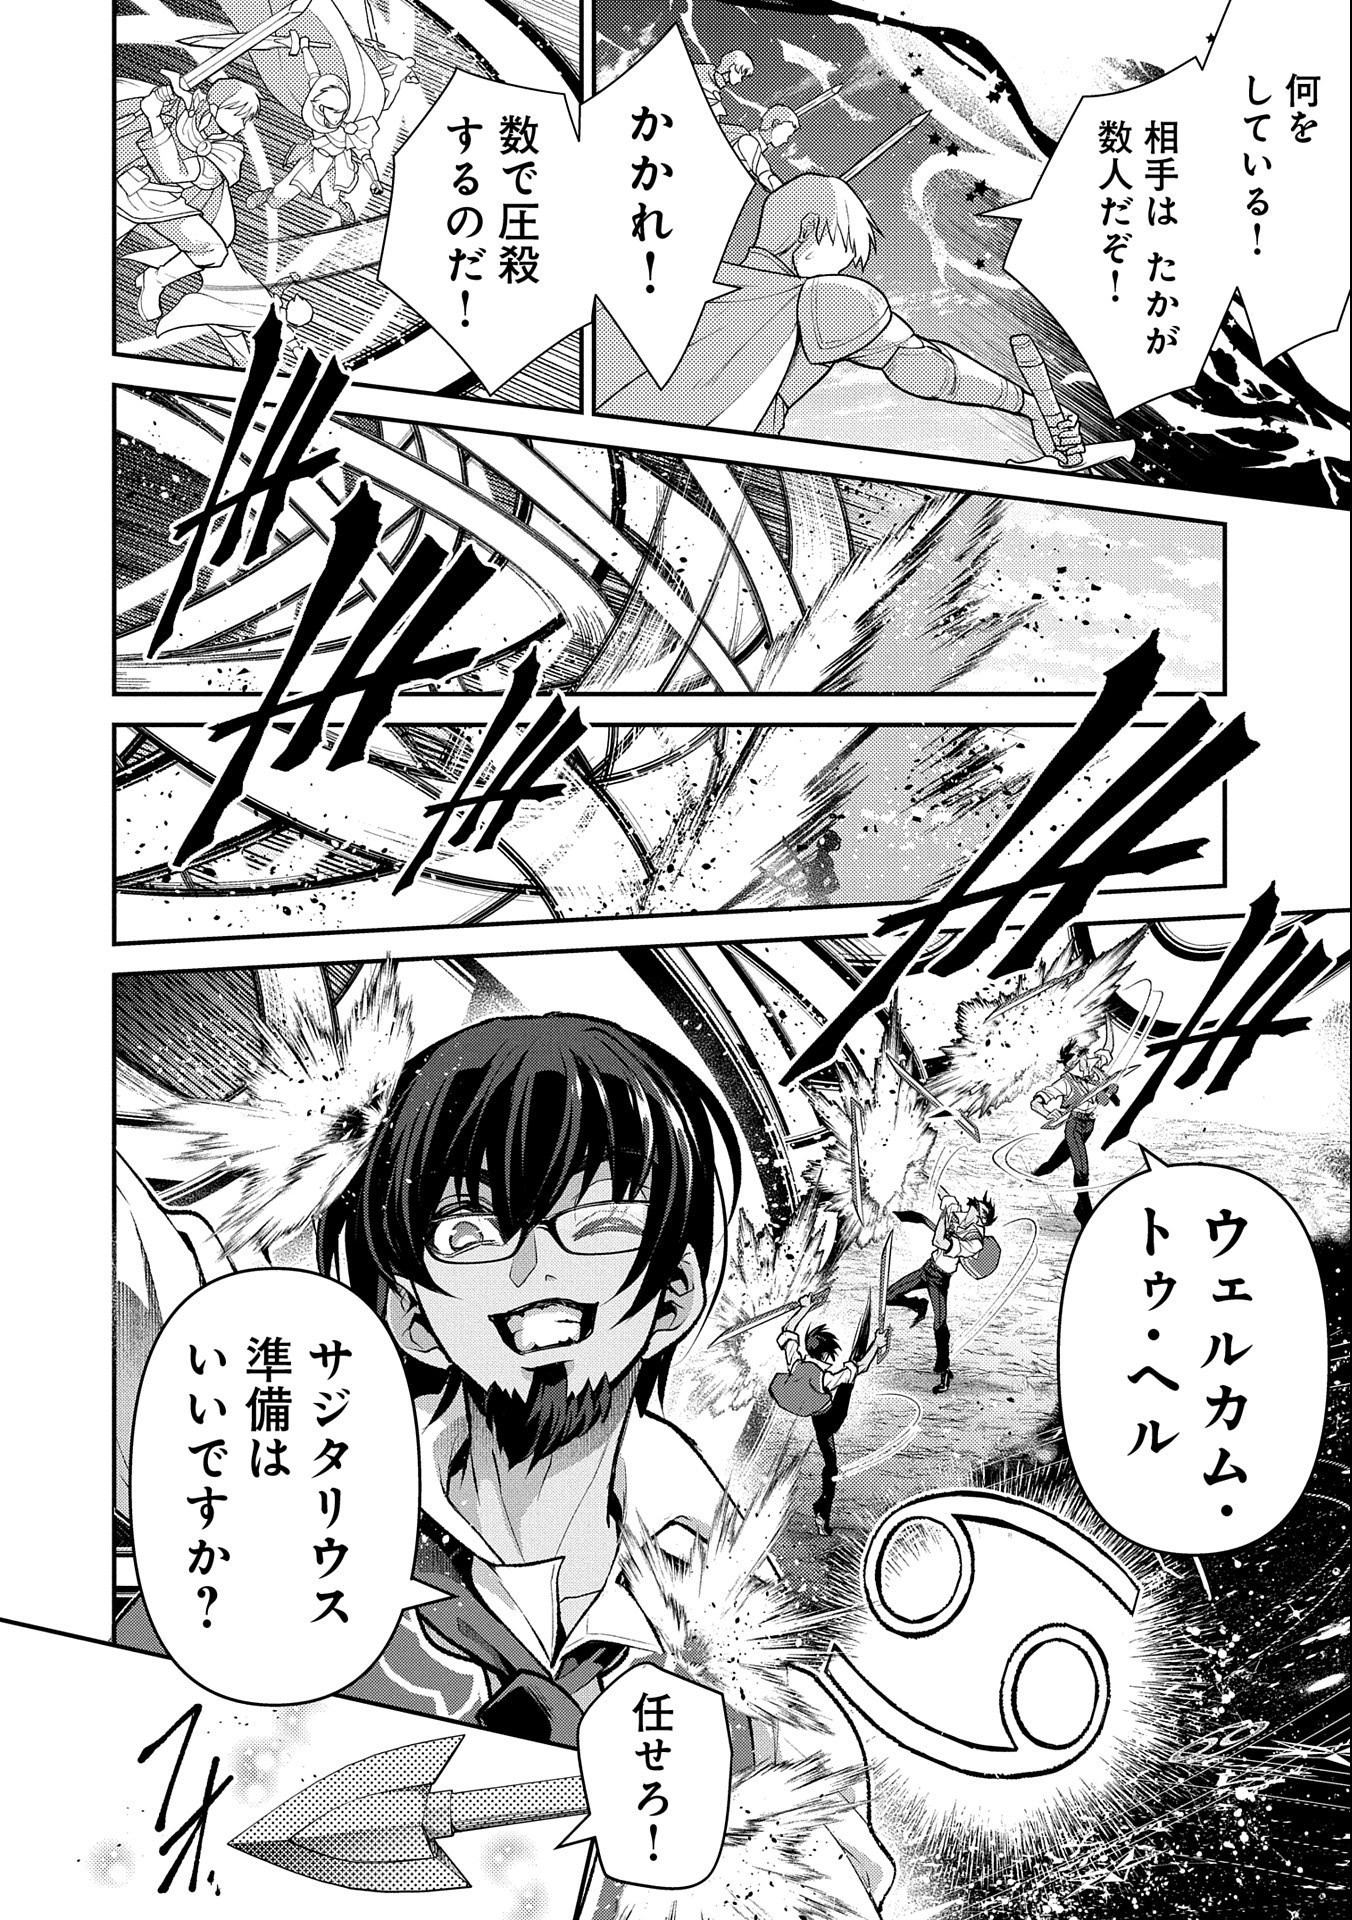 Yasei no Last Boss ga Arawareta! - Chapter 45.2 - Page 2